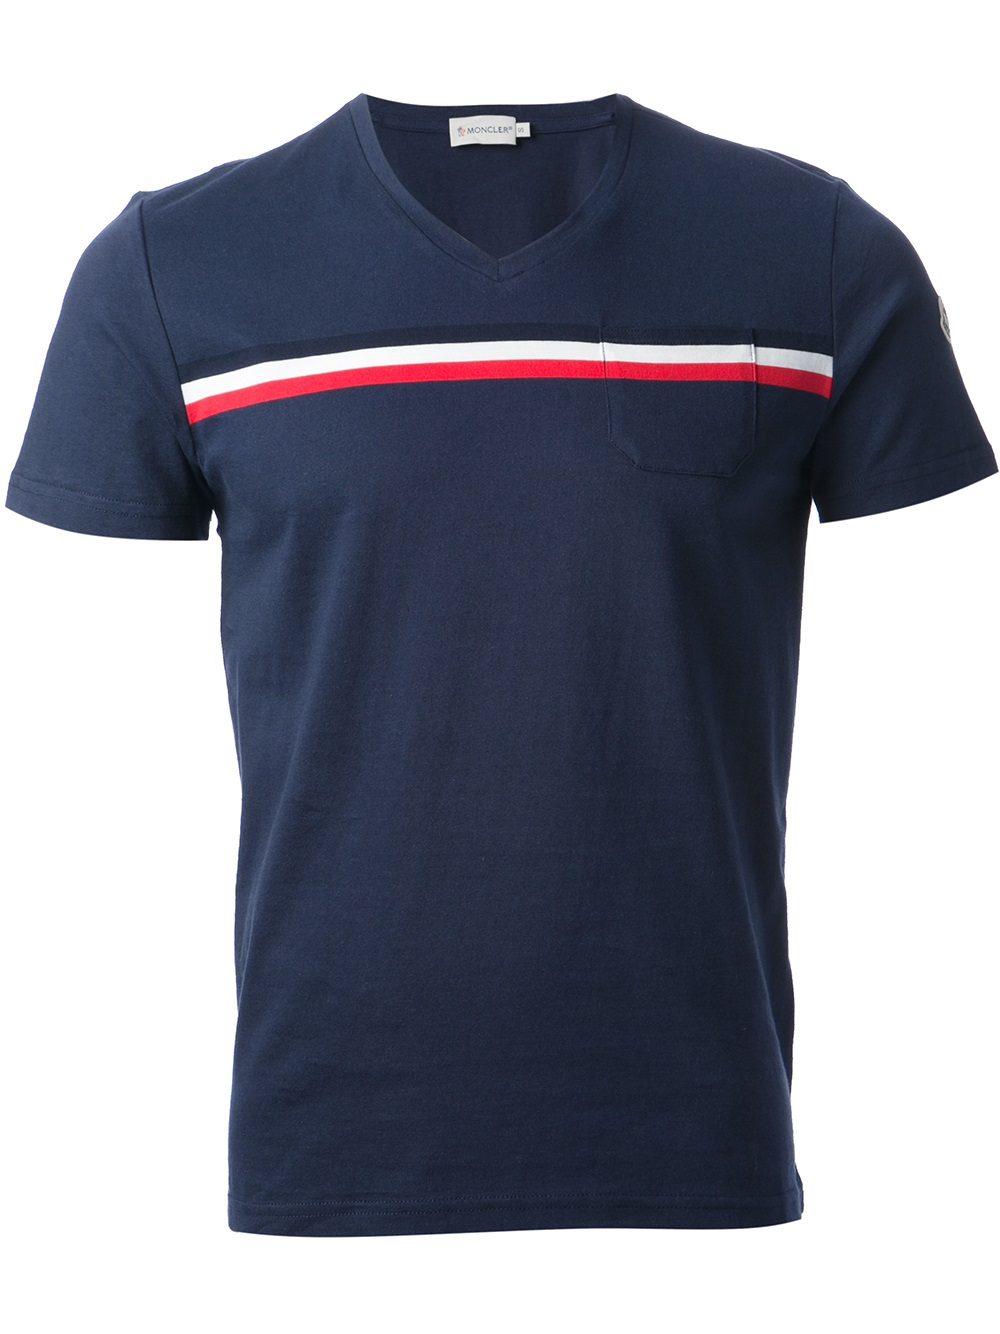 Lyst - Moncler Stripe Tshirt in Blue for Men